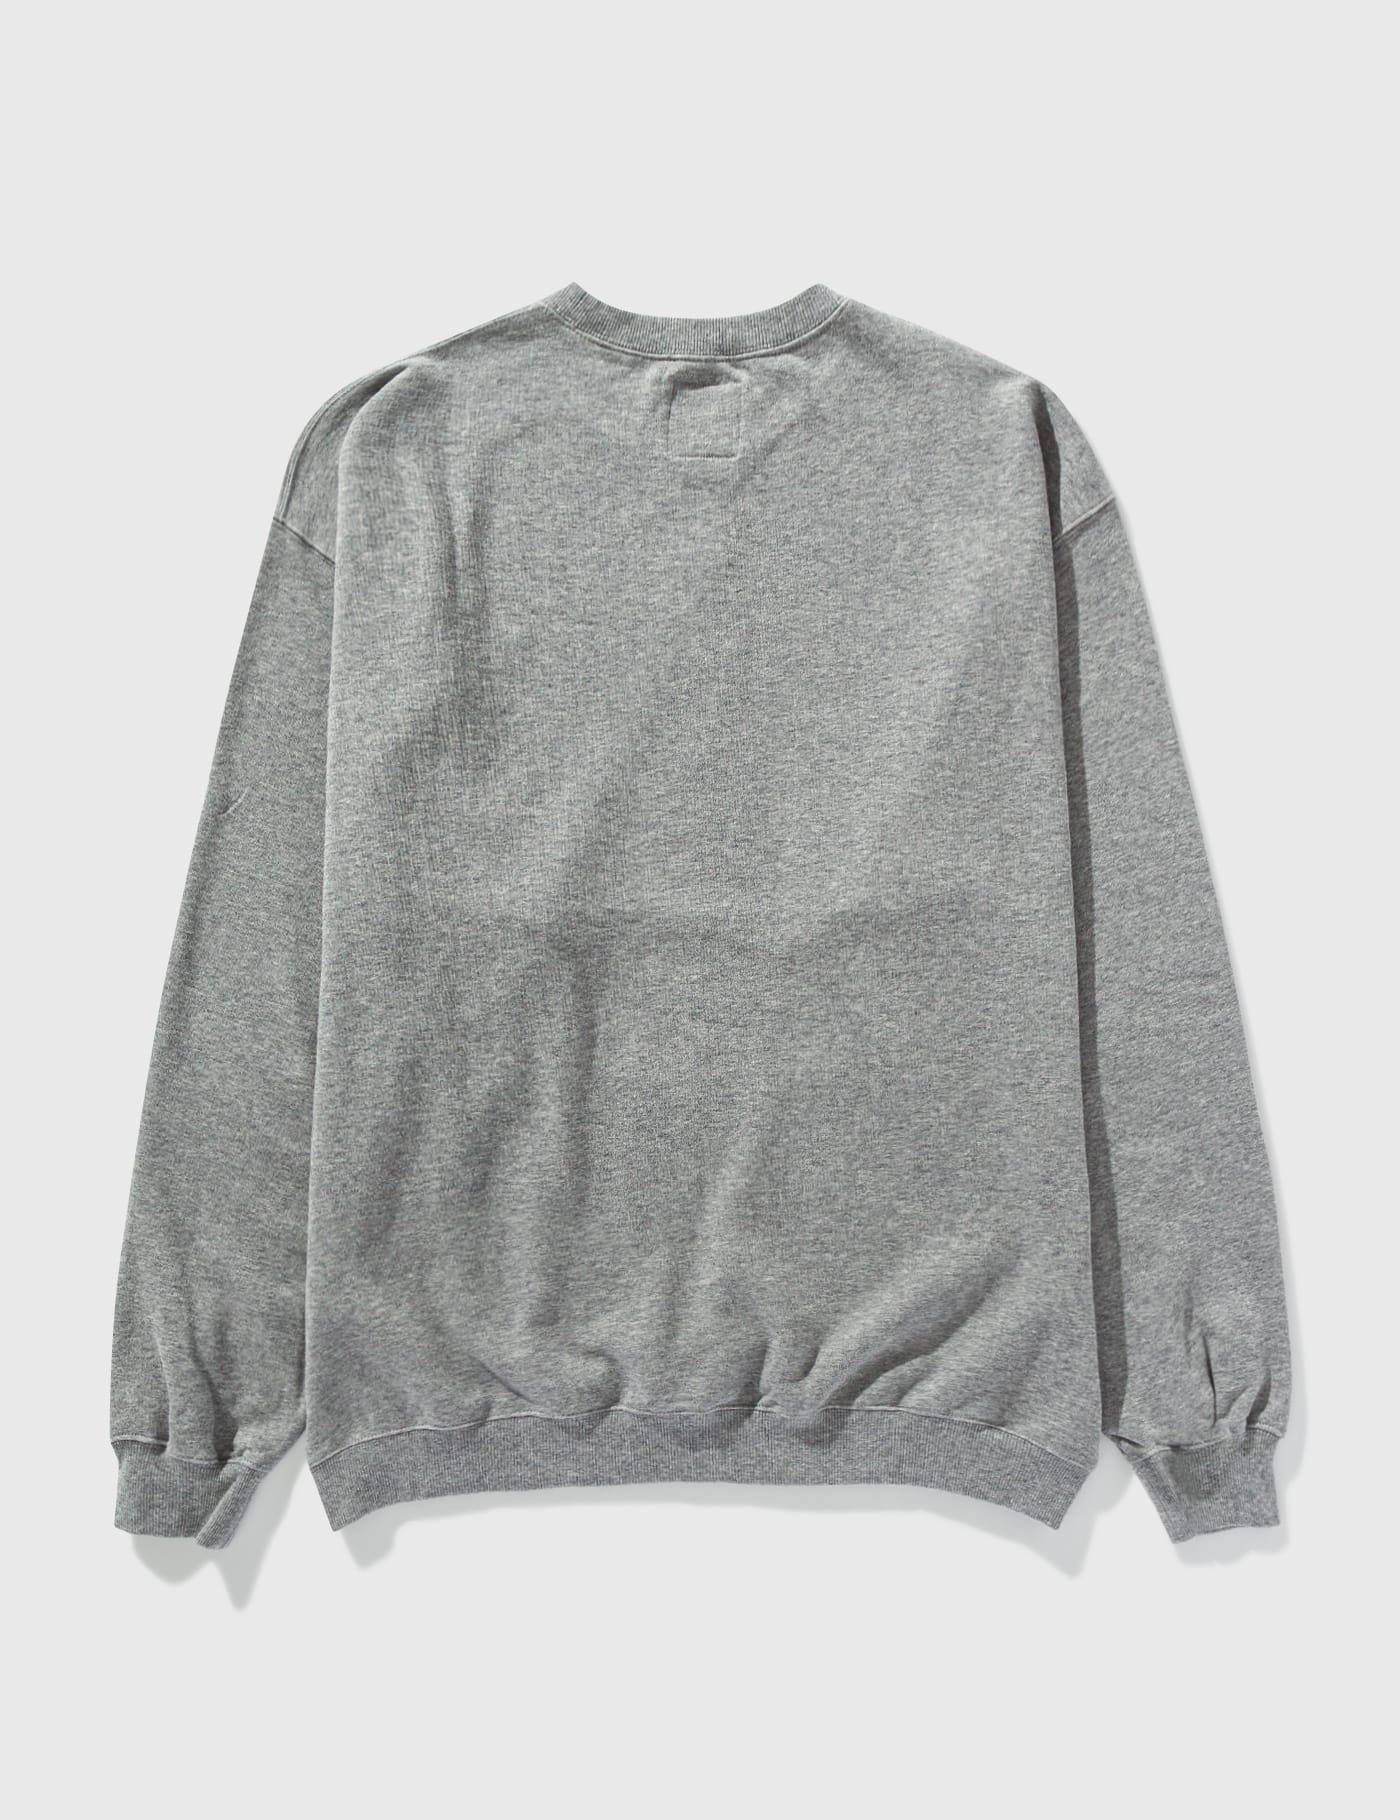 Gramicci - One Point Sweatshirt | HBX - Globally Curated Fashion